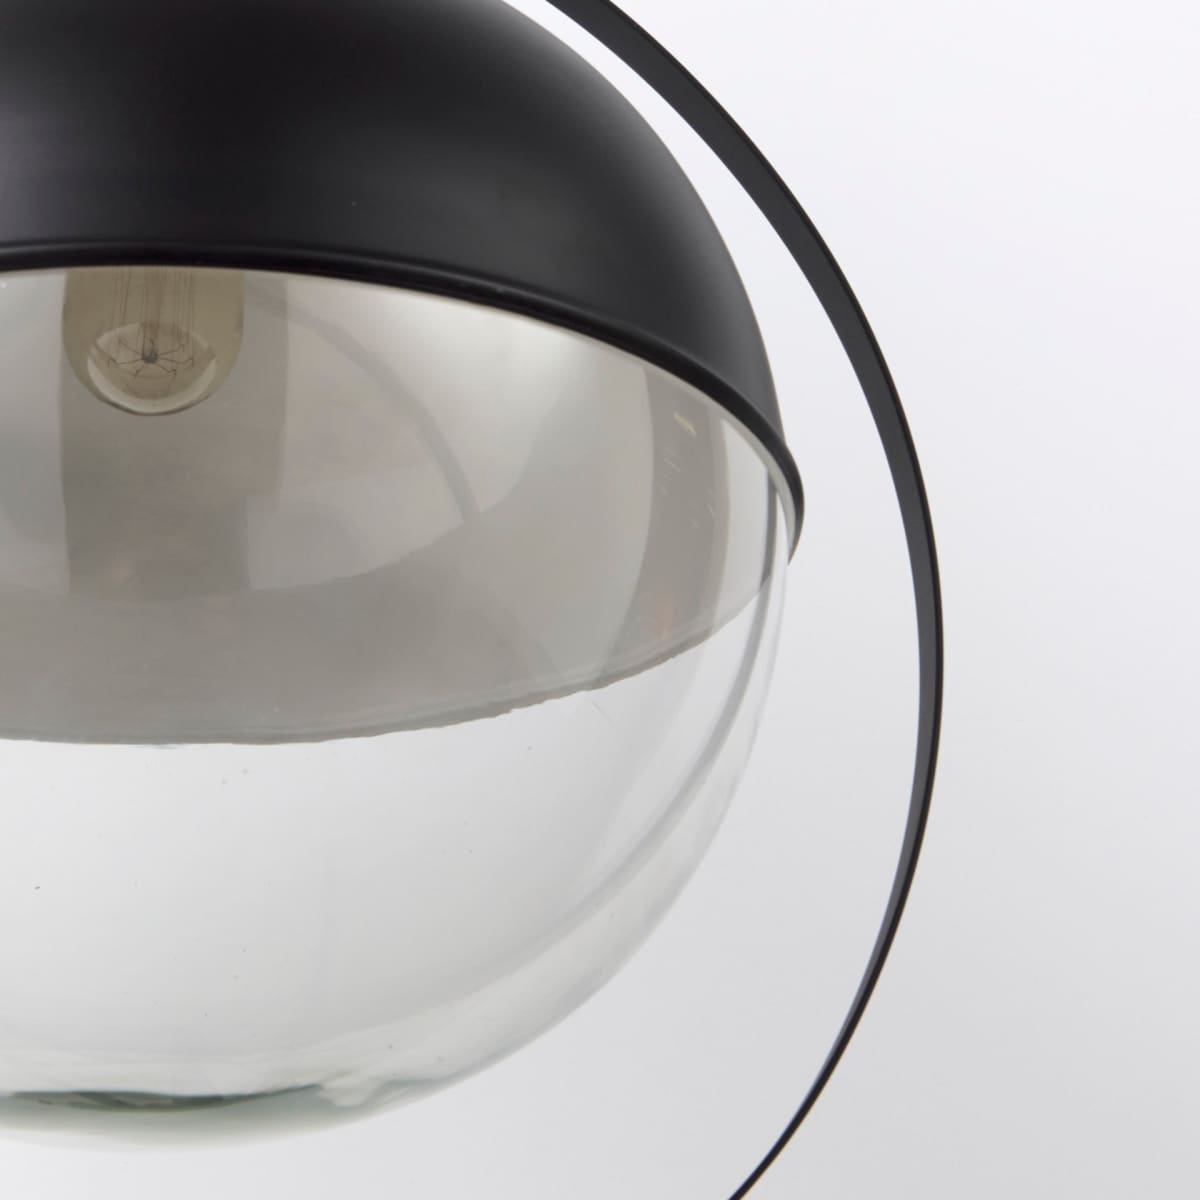 Leighton Pendant Light Black Metal | Glass Globe - pendant-light